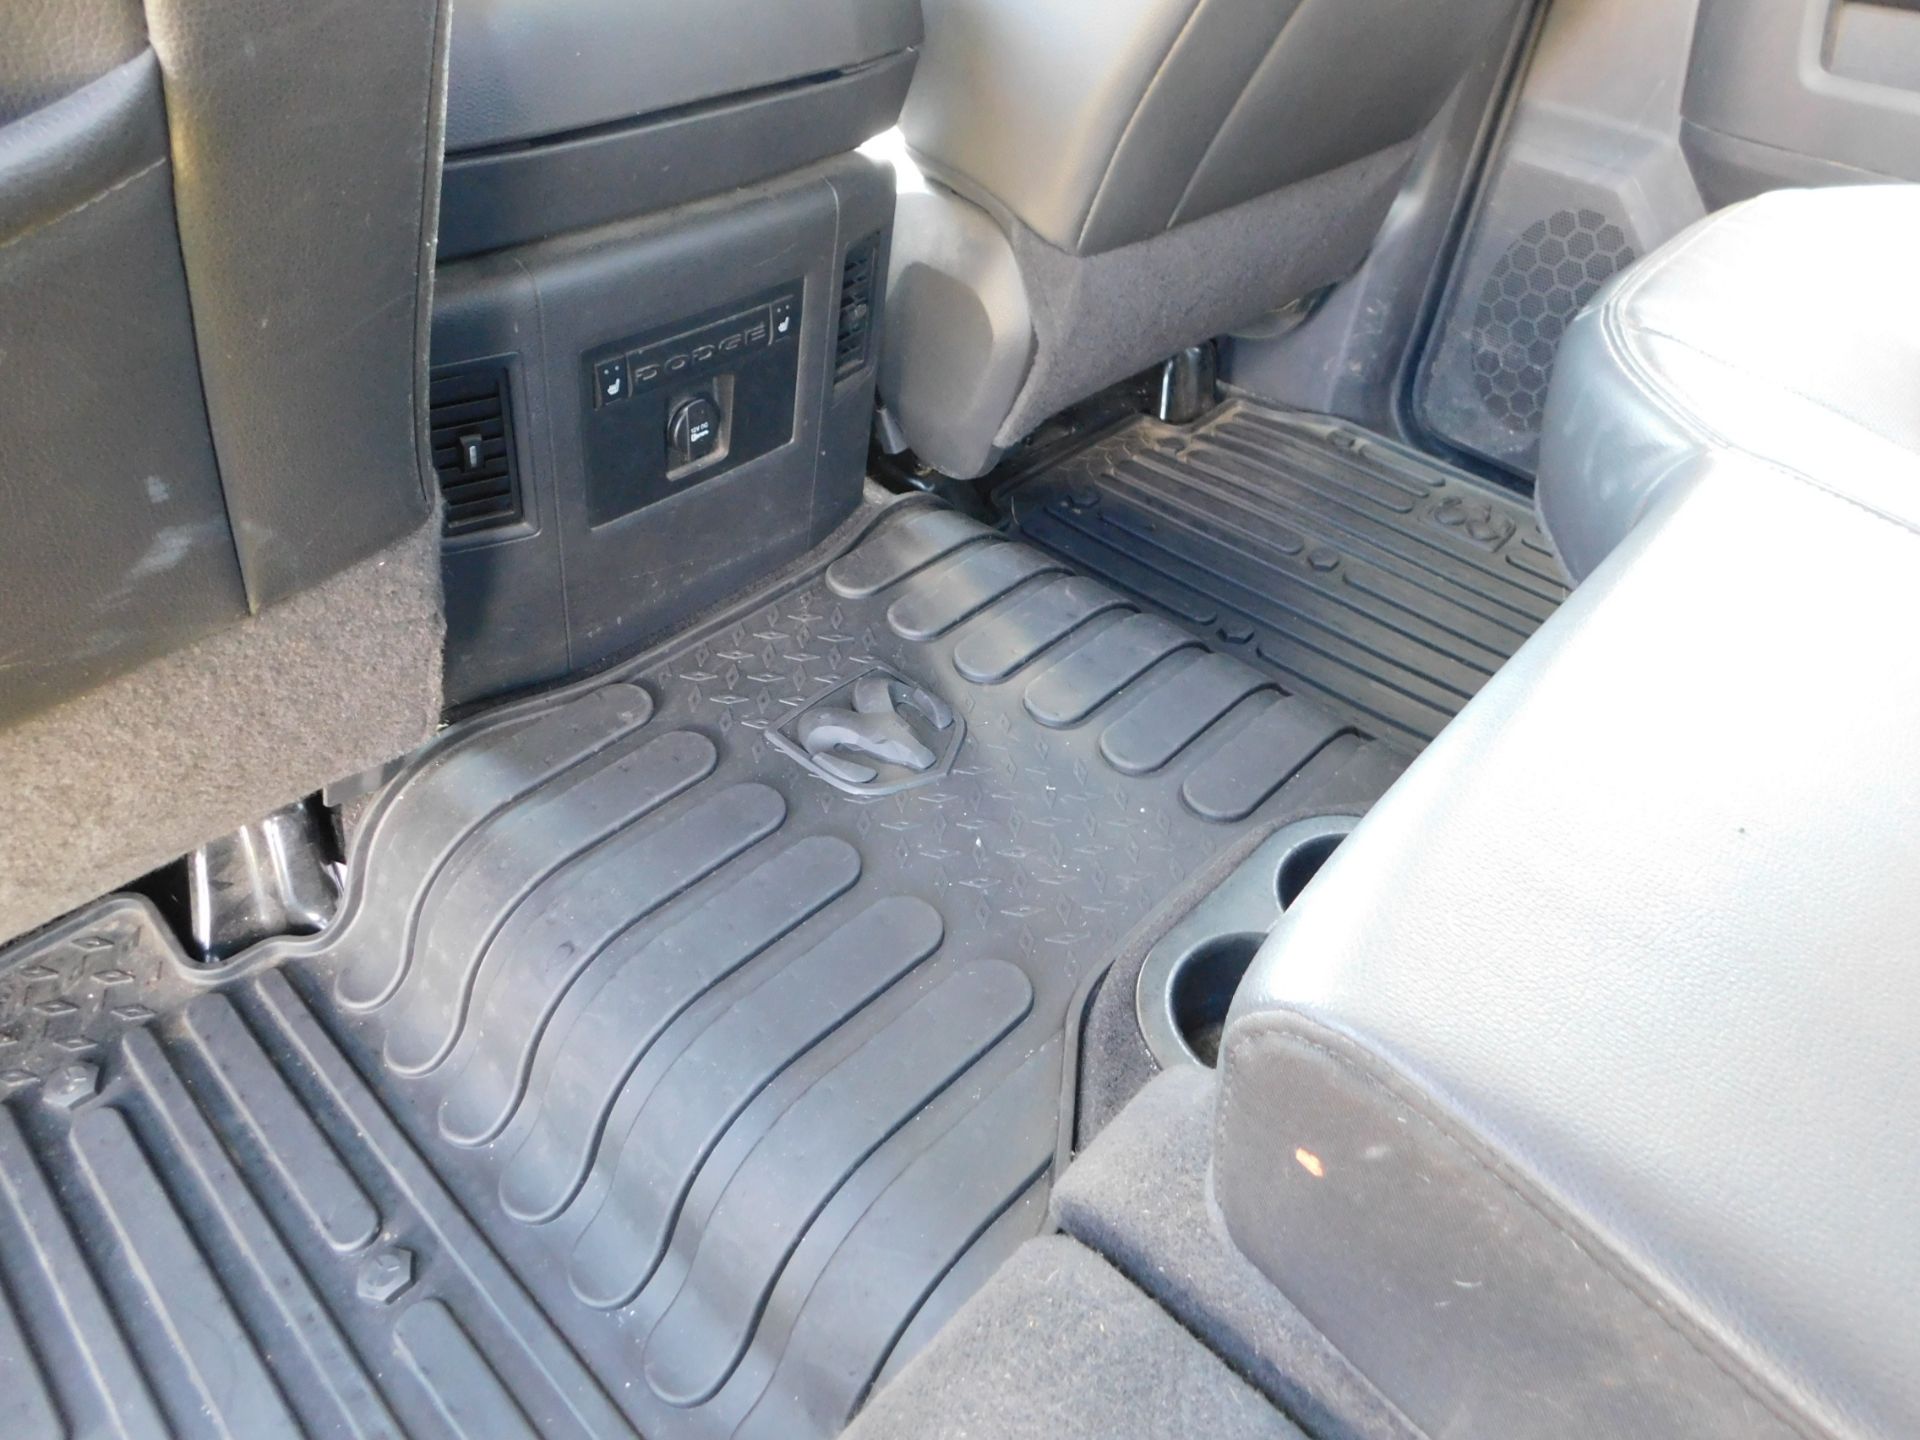 2012 Dodge Ram 1500 Pickup, Crew Cab, 6' Bed, Automatic, 4 WD, AM/FM,AC, PL, PW, Hemi 5.7 L - Image 38 of 53